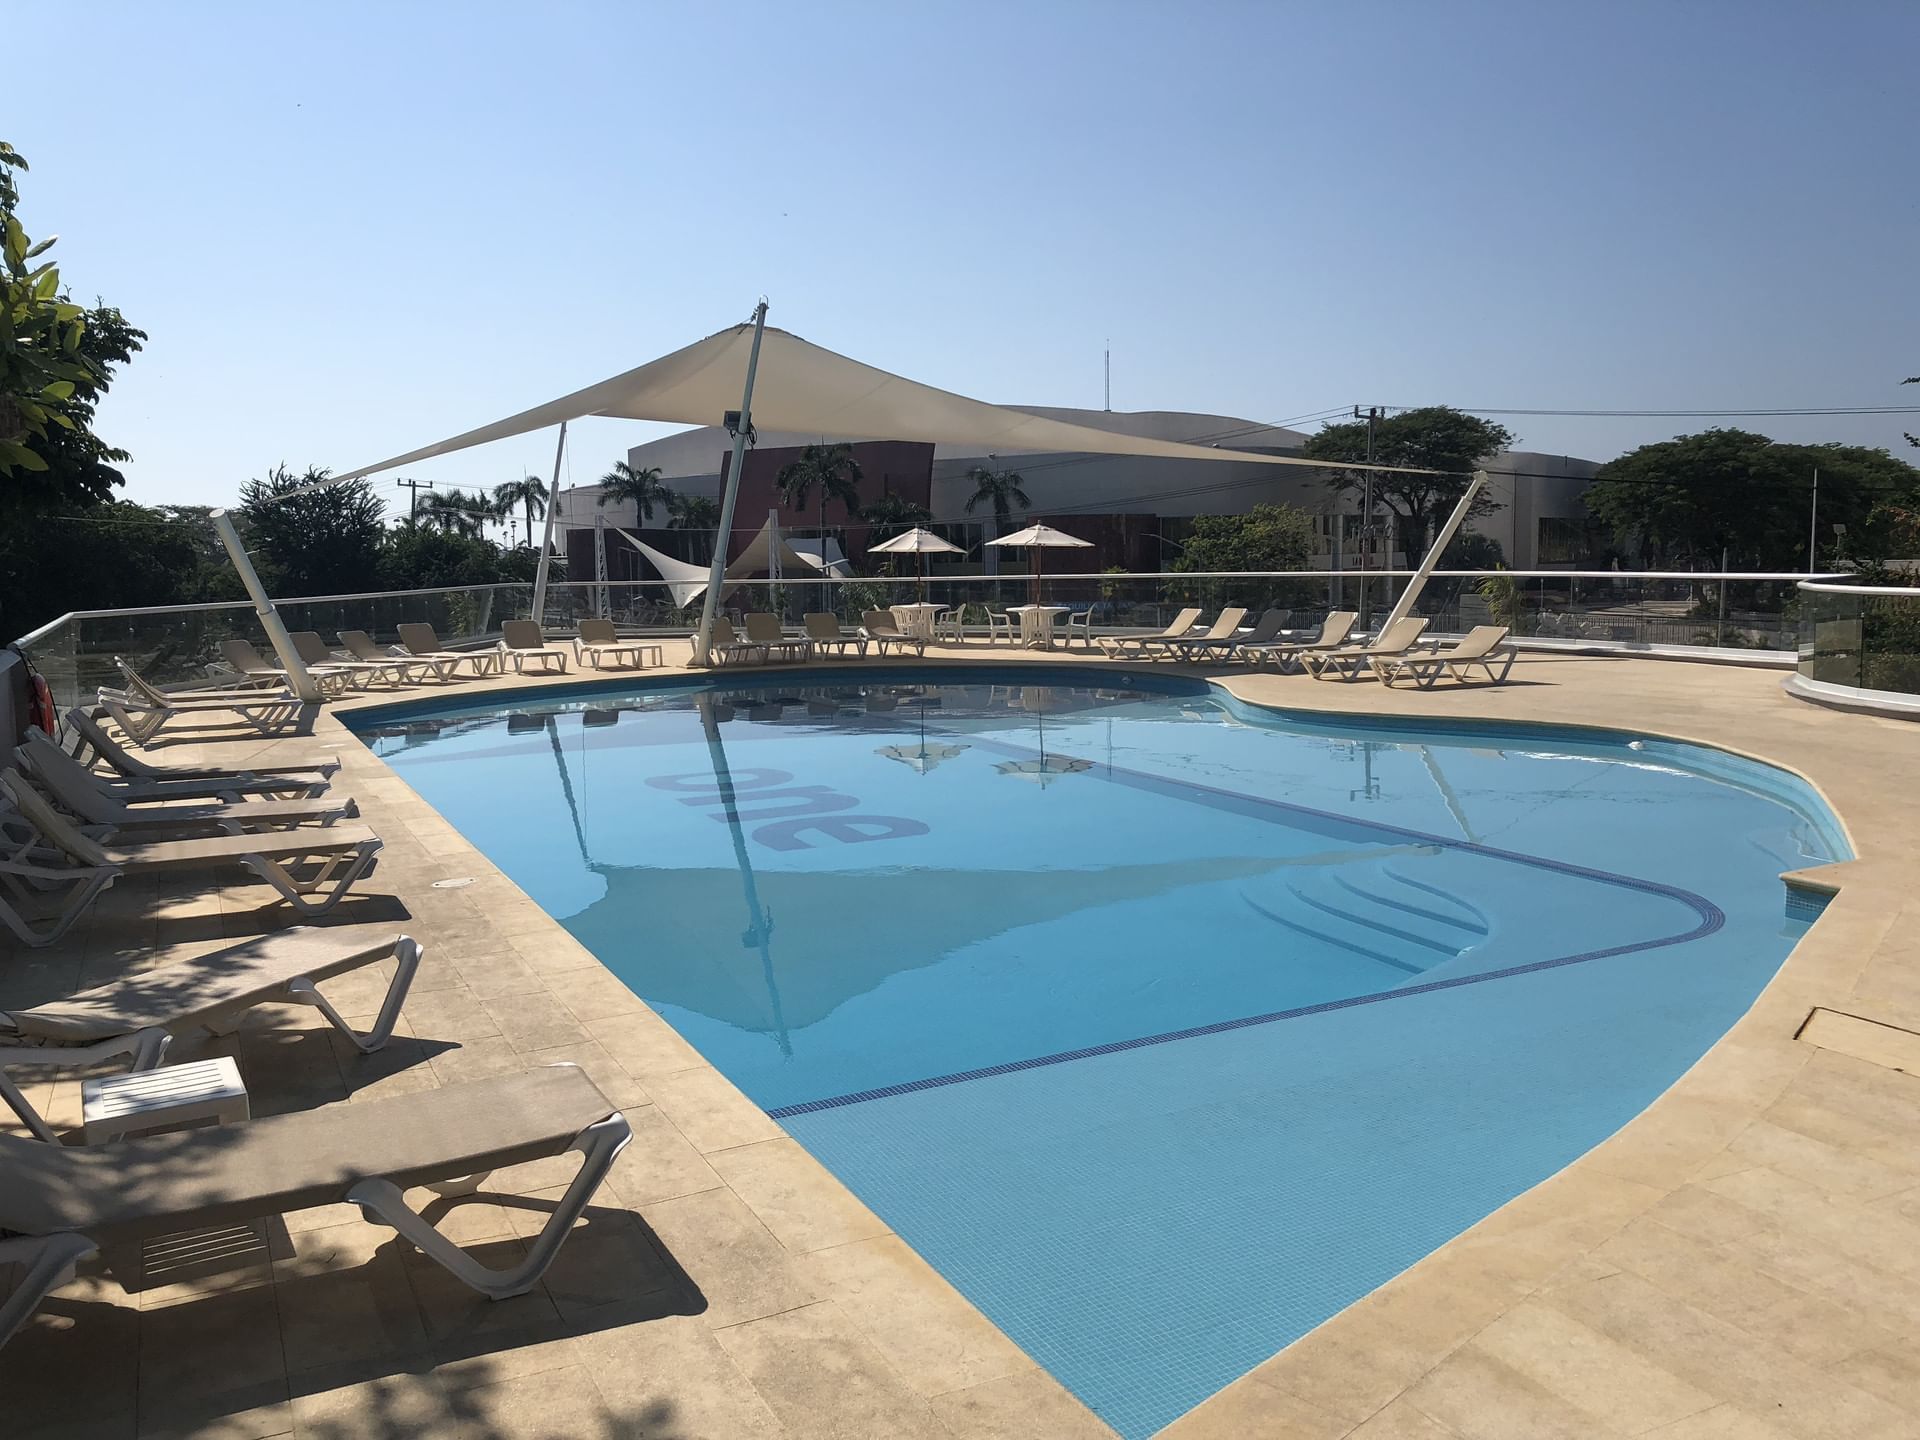 Terraza piscina con tumbonas a su alrededor en One Hotels